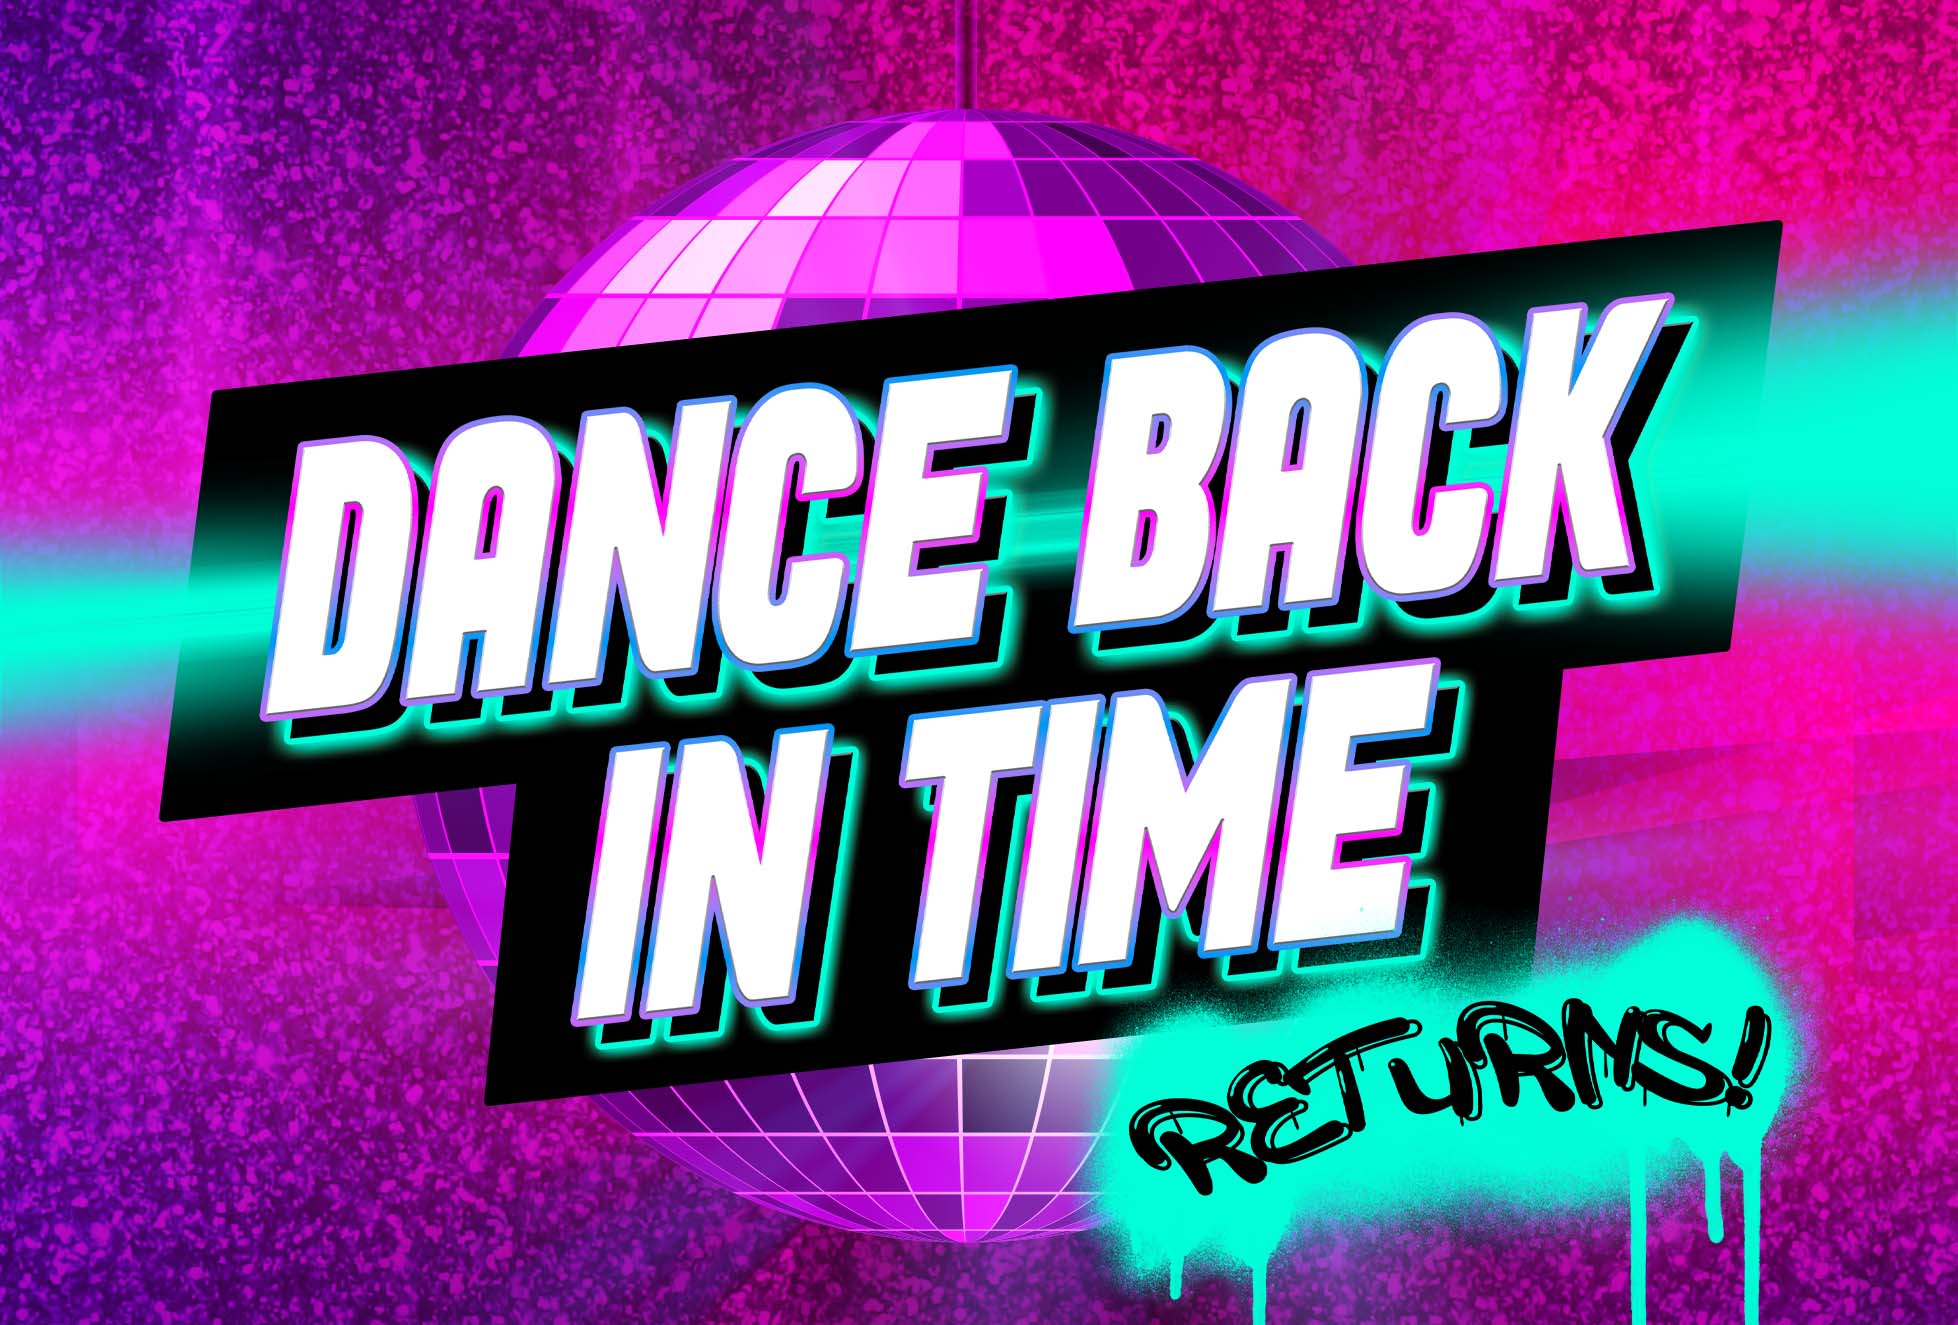 Dance Back in Time, Returns!